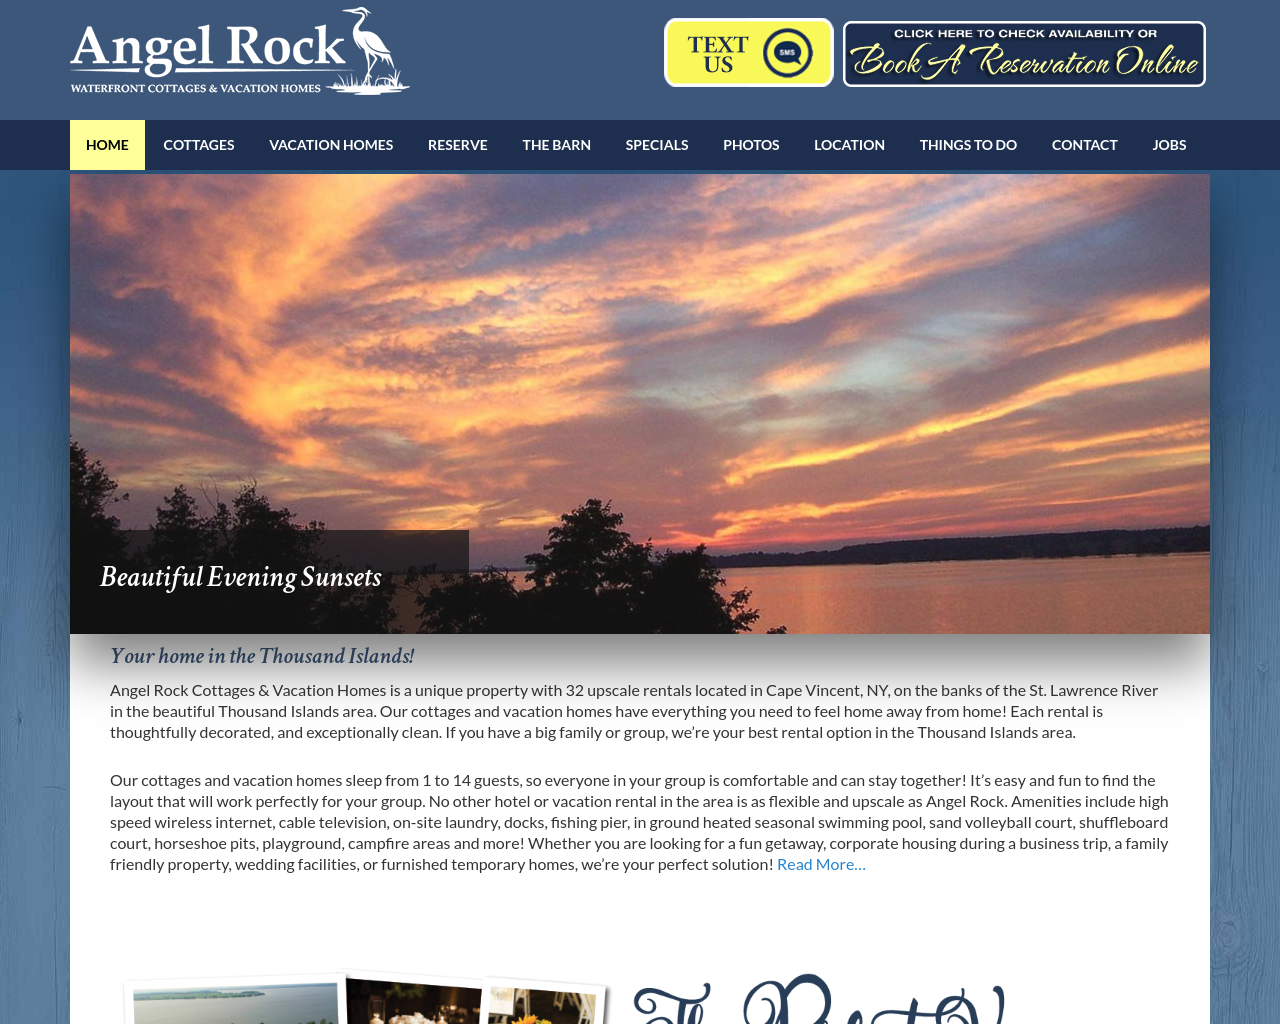 angelrock.com